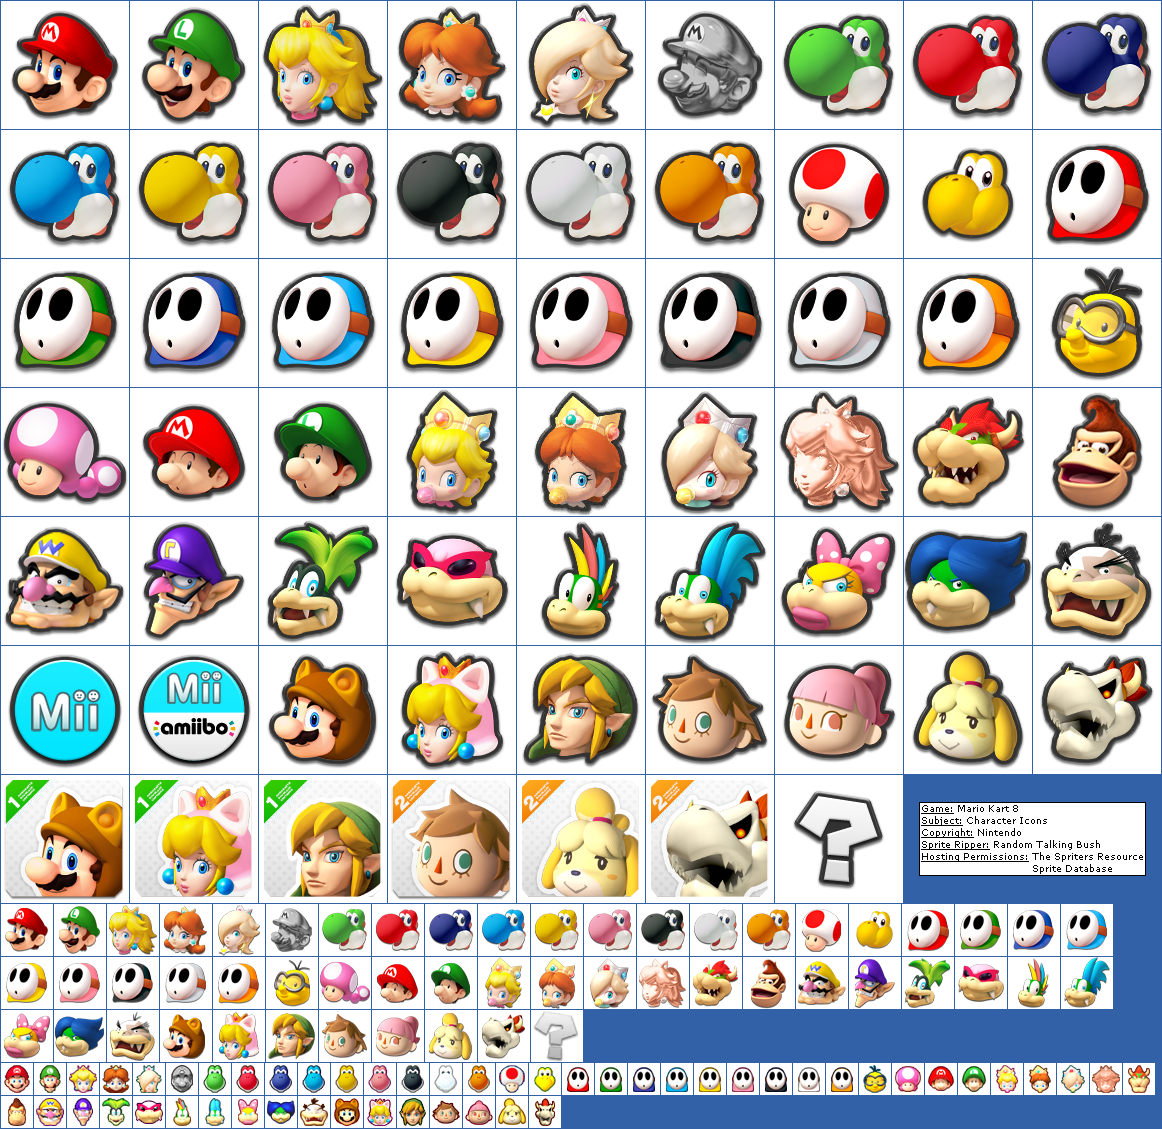 Mario Kart 8 - Character Icons